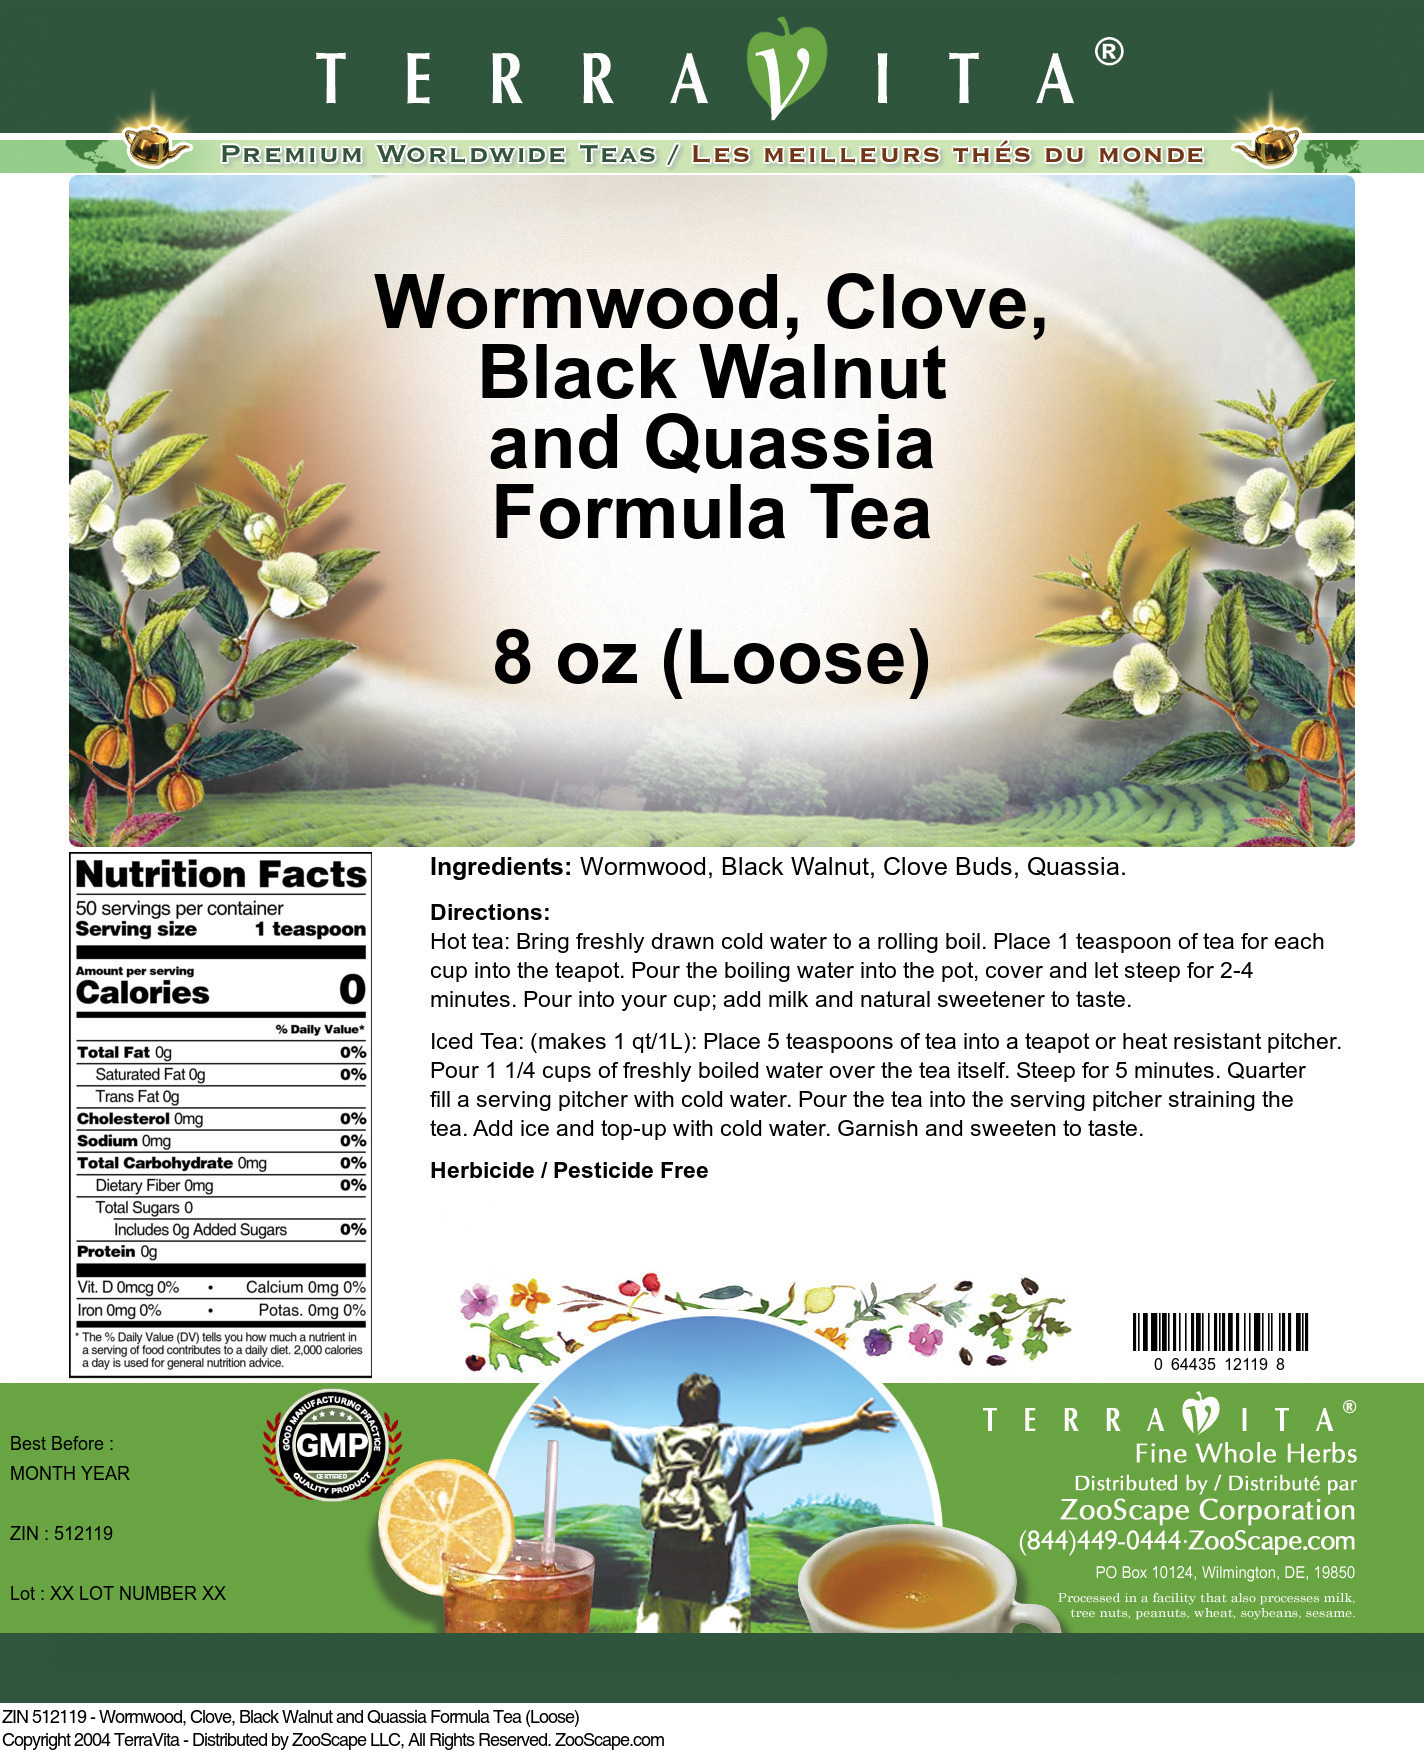 Wormwood, Clove, Black Walnut and Quassi Formula Tea (Loose) - Label